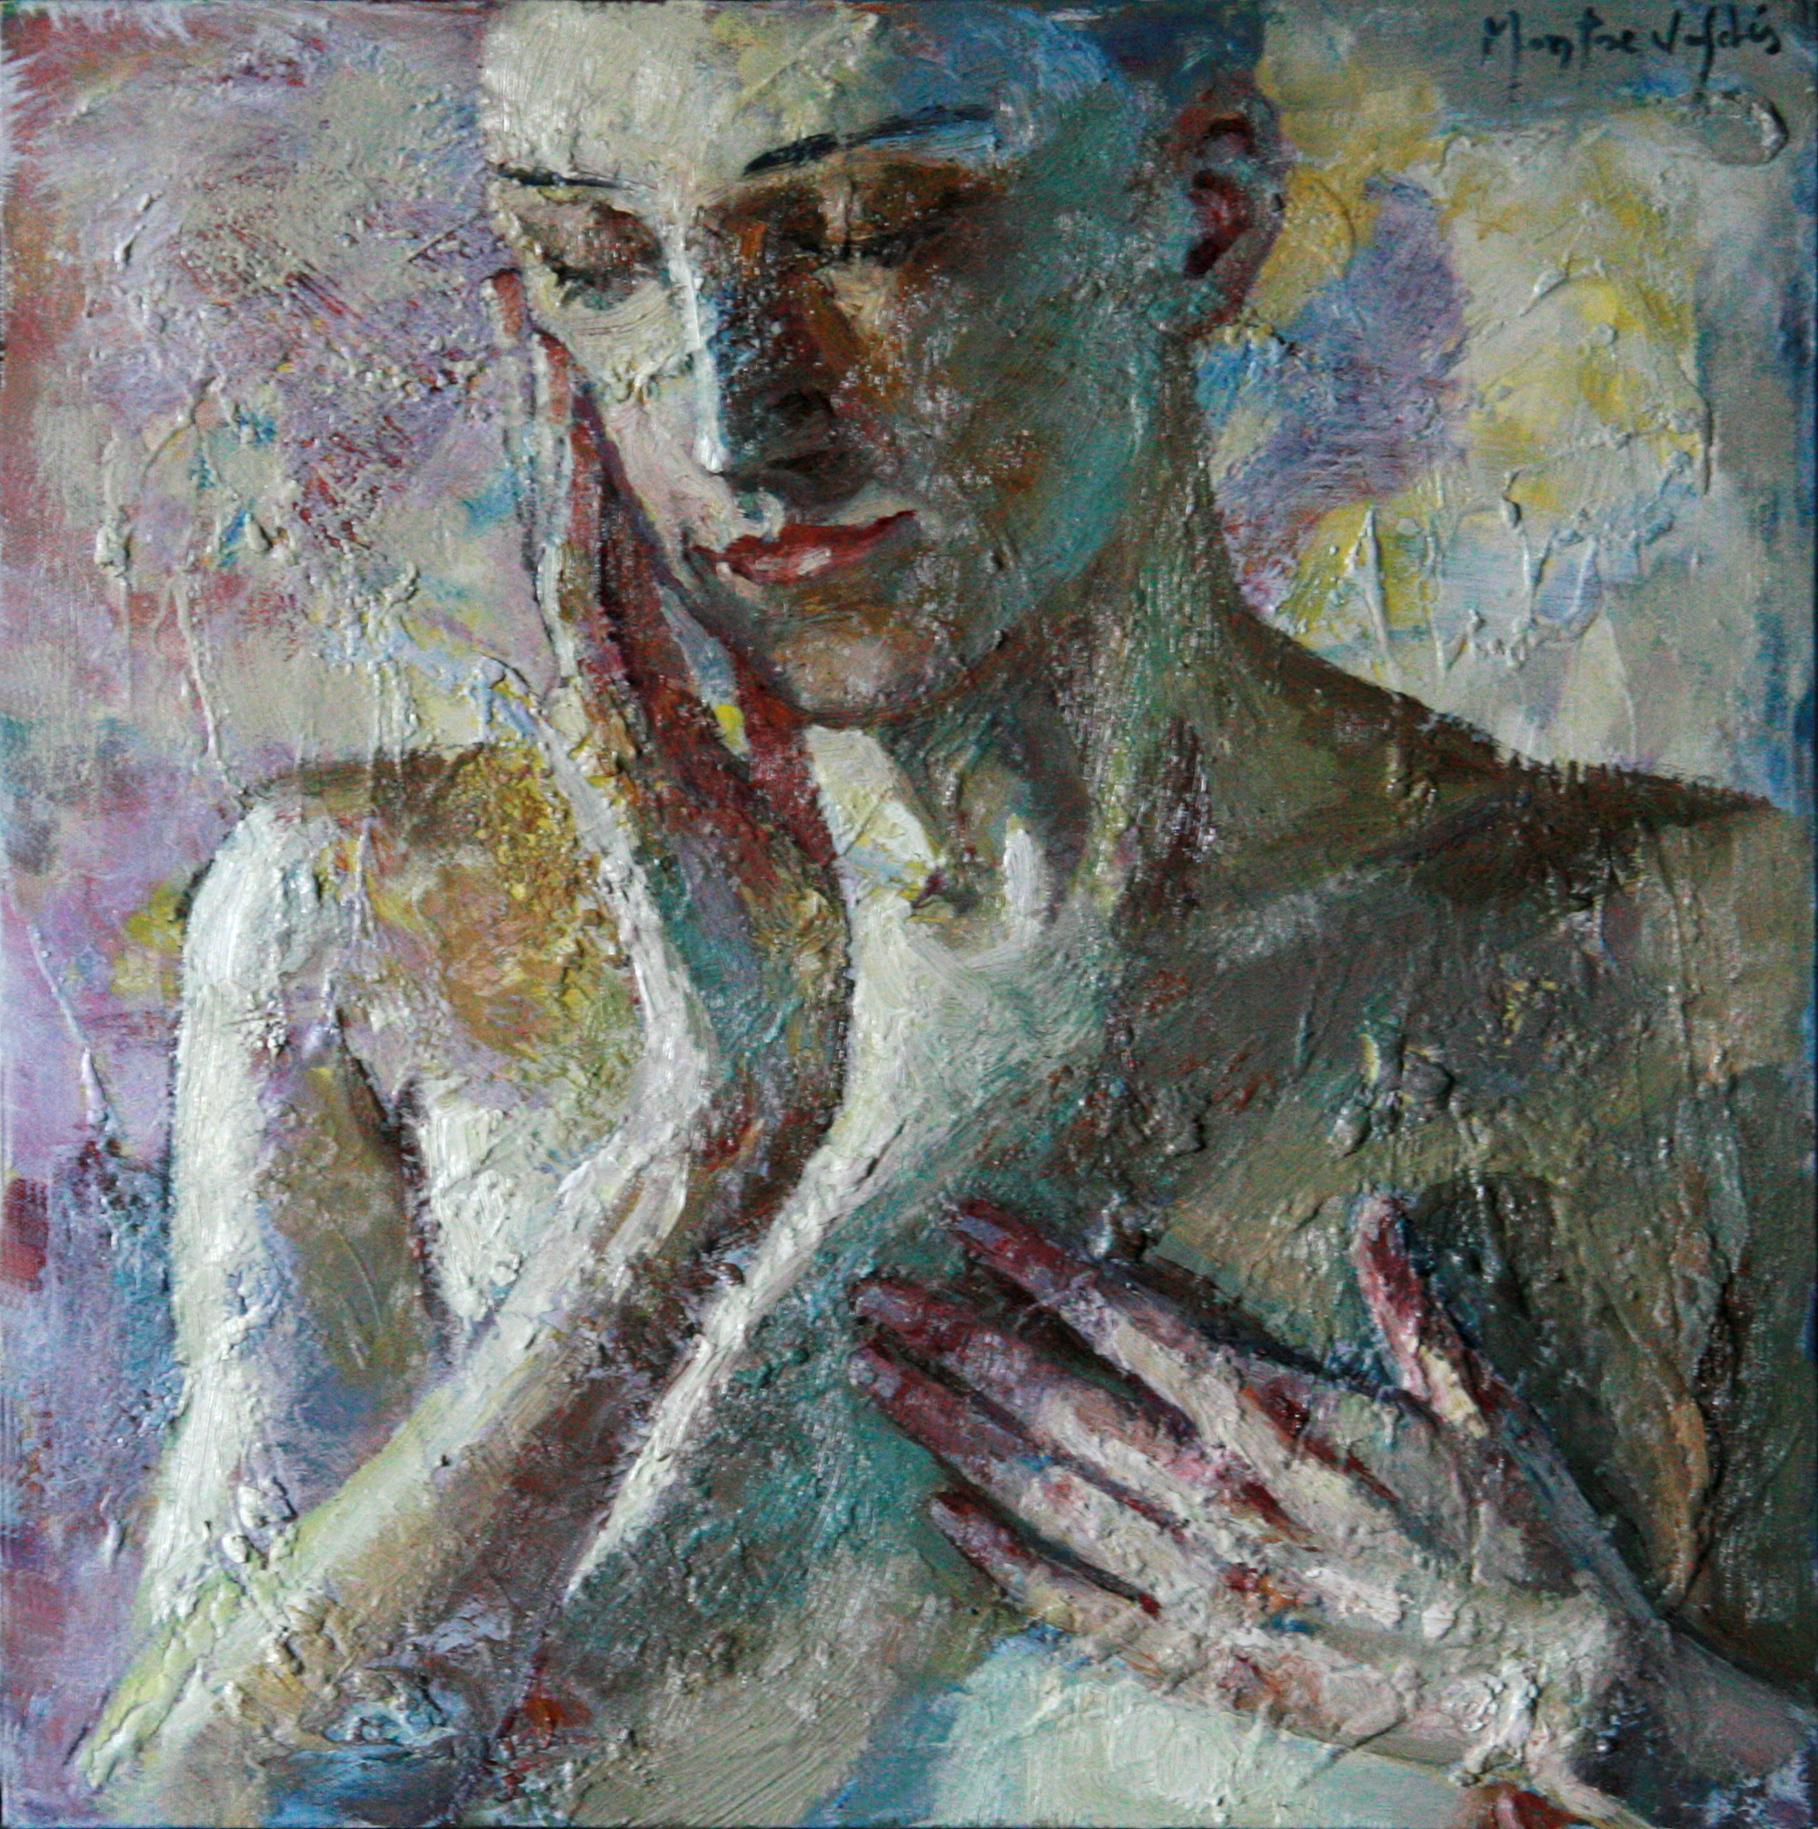 Montse Valdés Portrait Painting - 9-9-111 - 21st Century, Contemporary, Nude Painting, Oil on Canvas